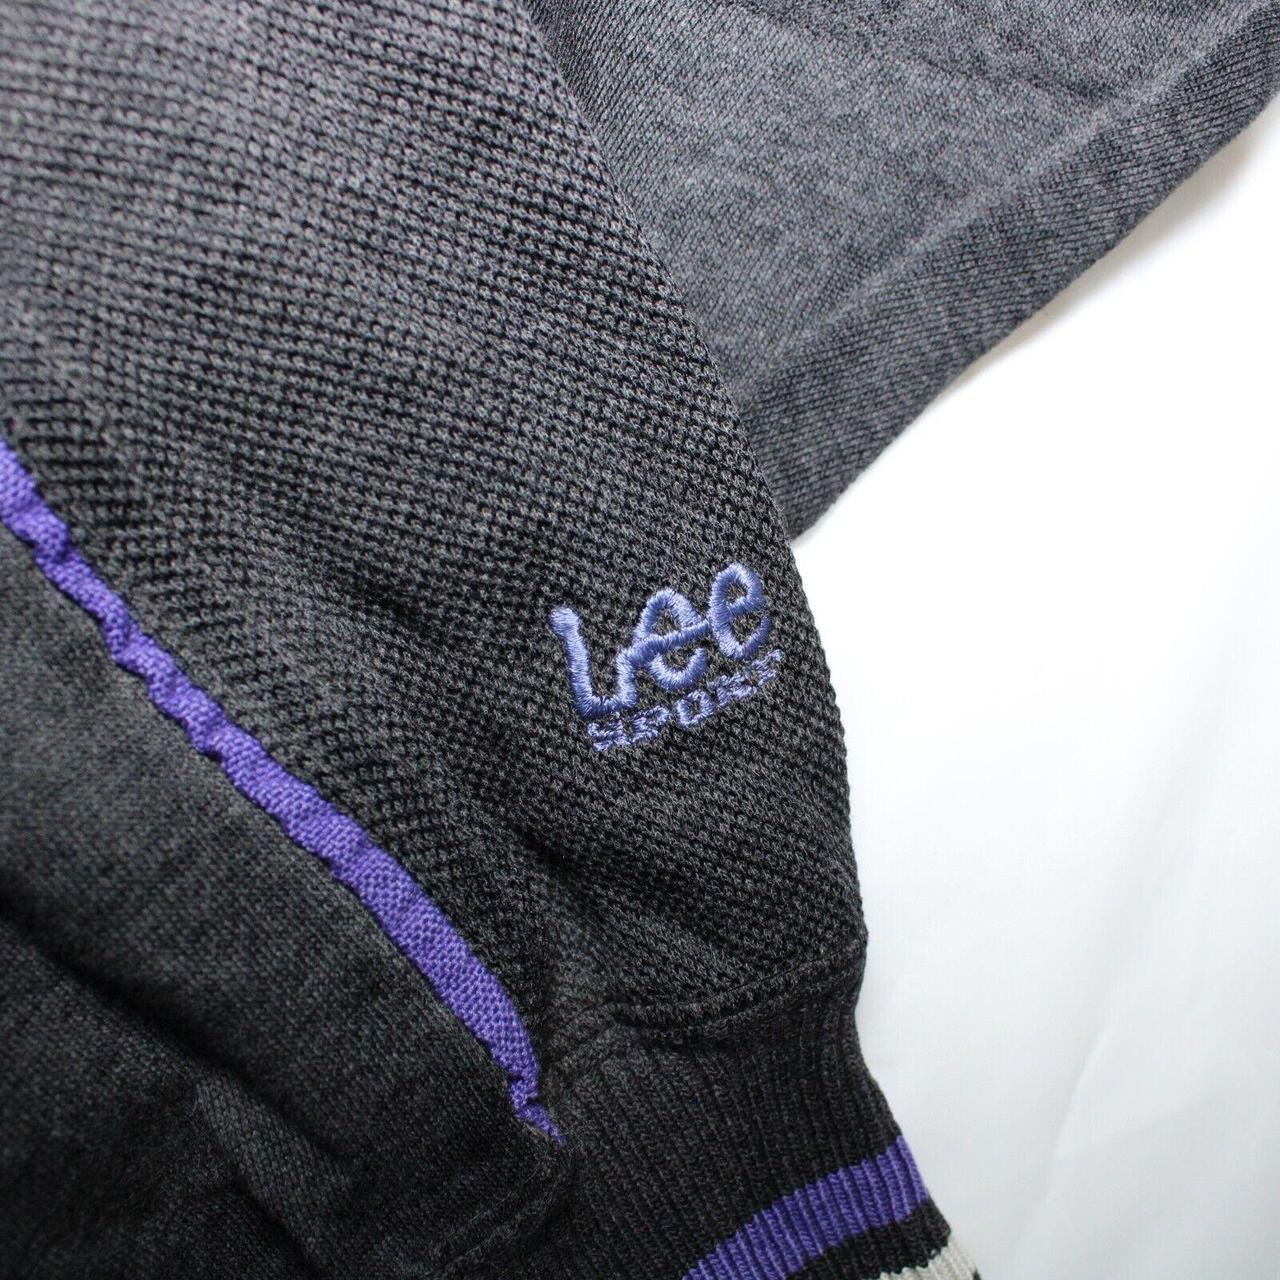 Vintage Lee Sport Sweatshirt Rare LA Lakers NBA - Depop